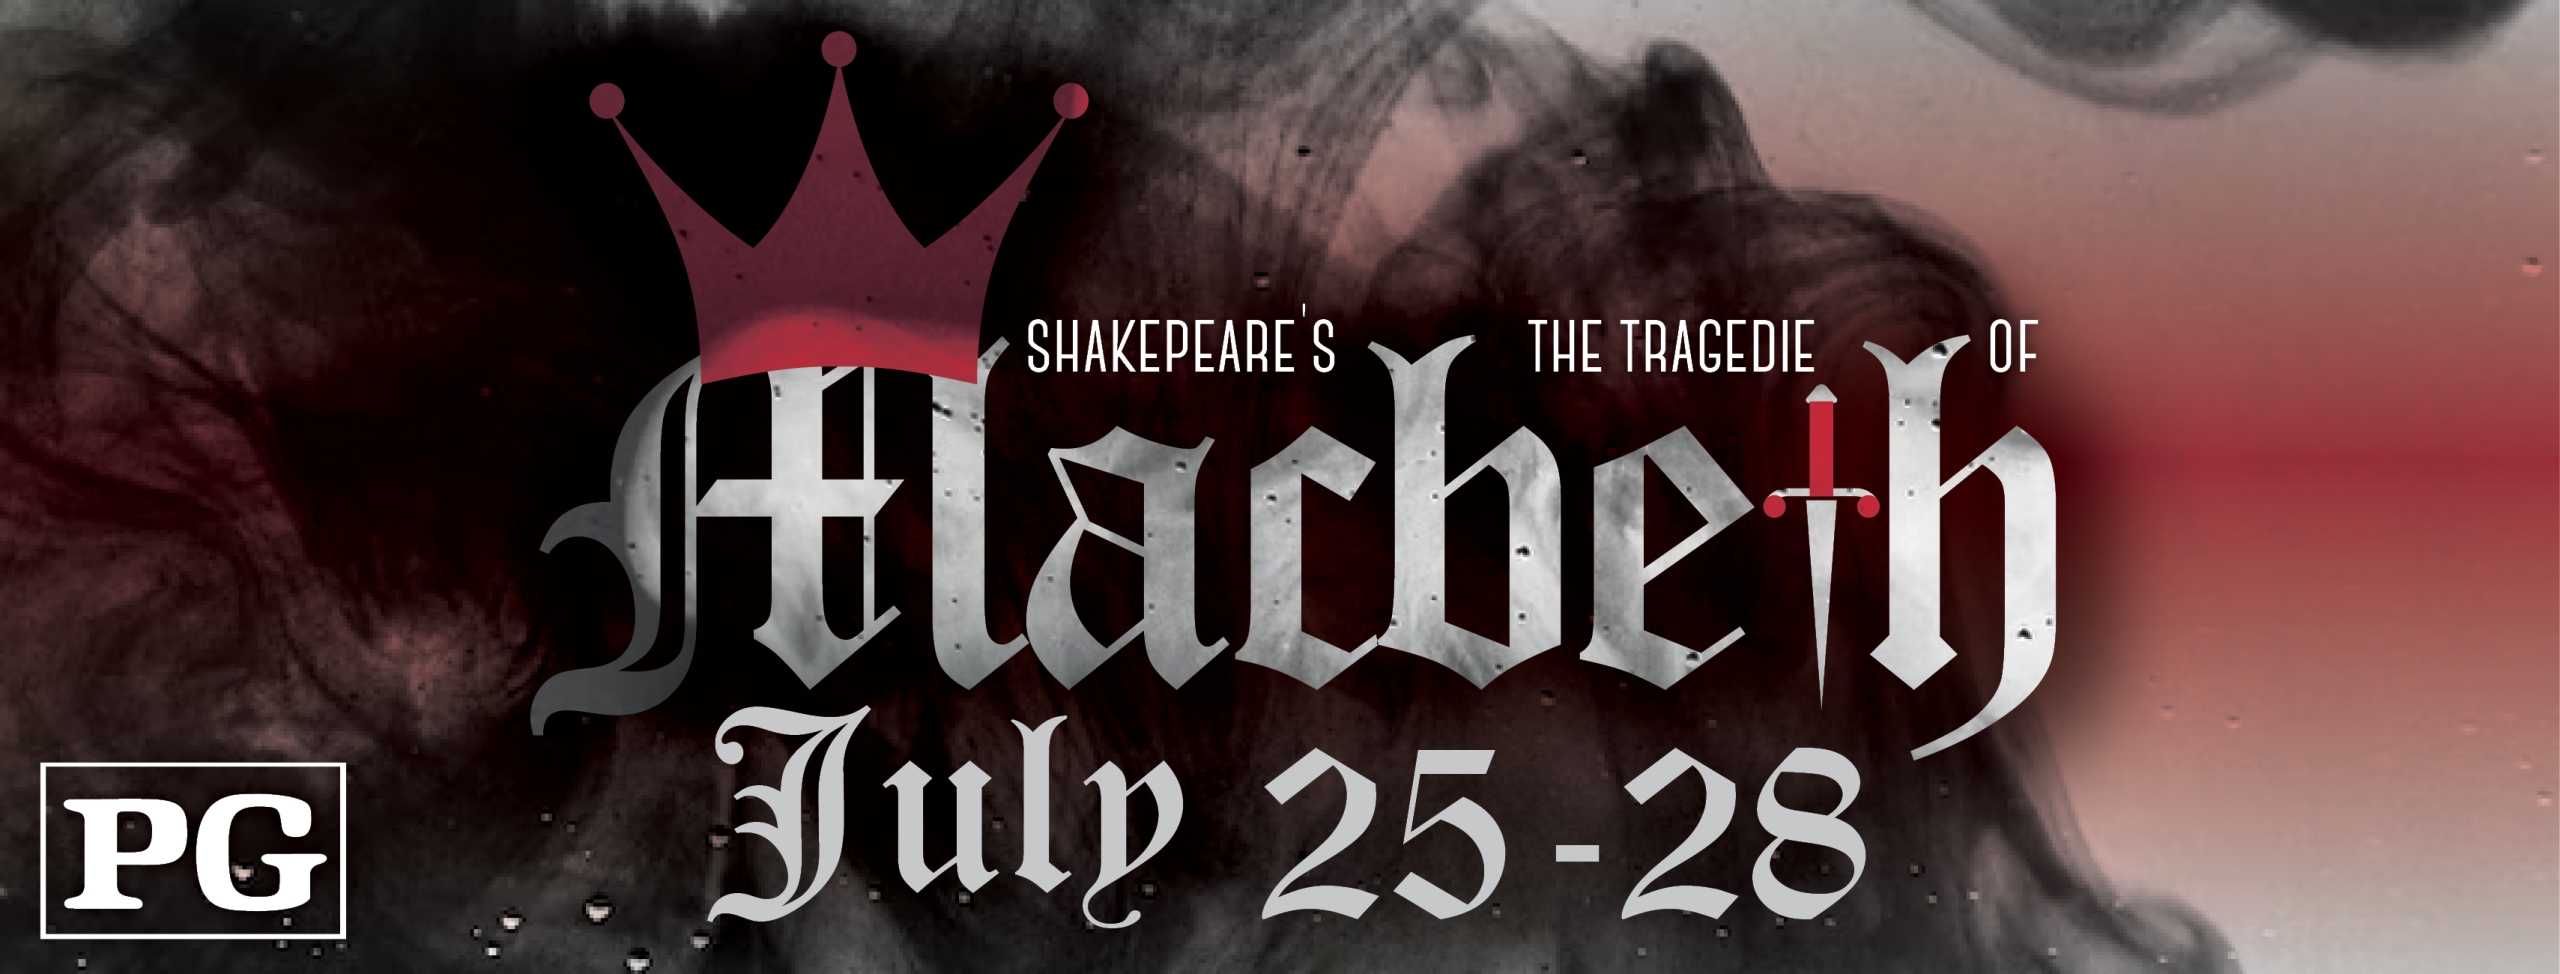 Macbeth Website Cover